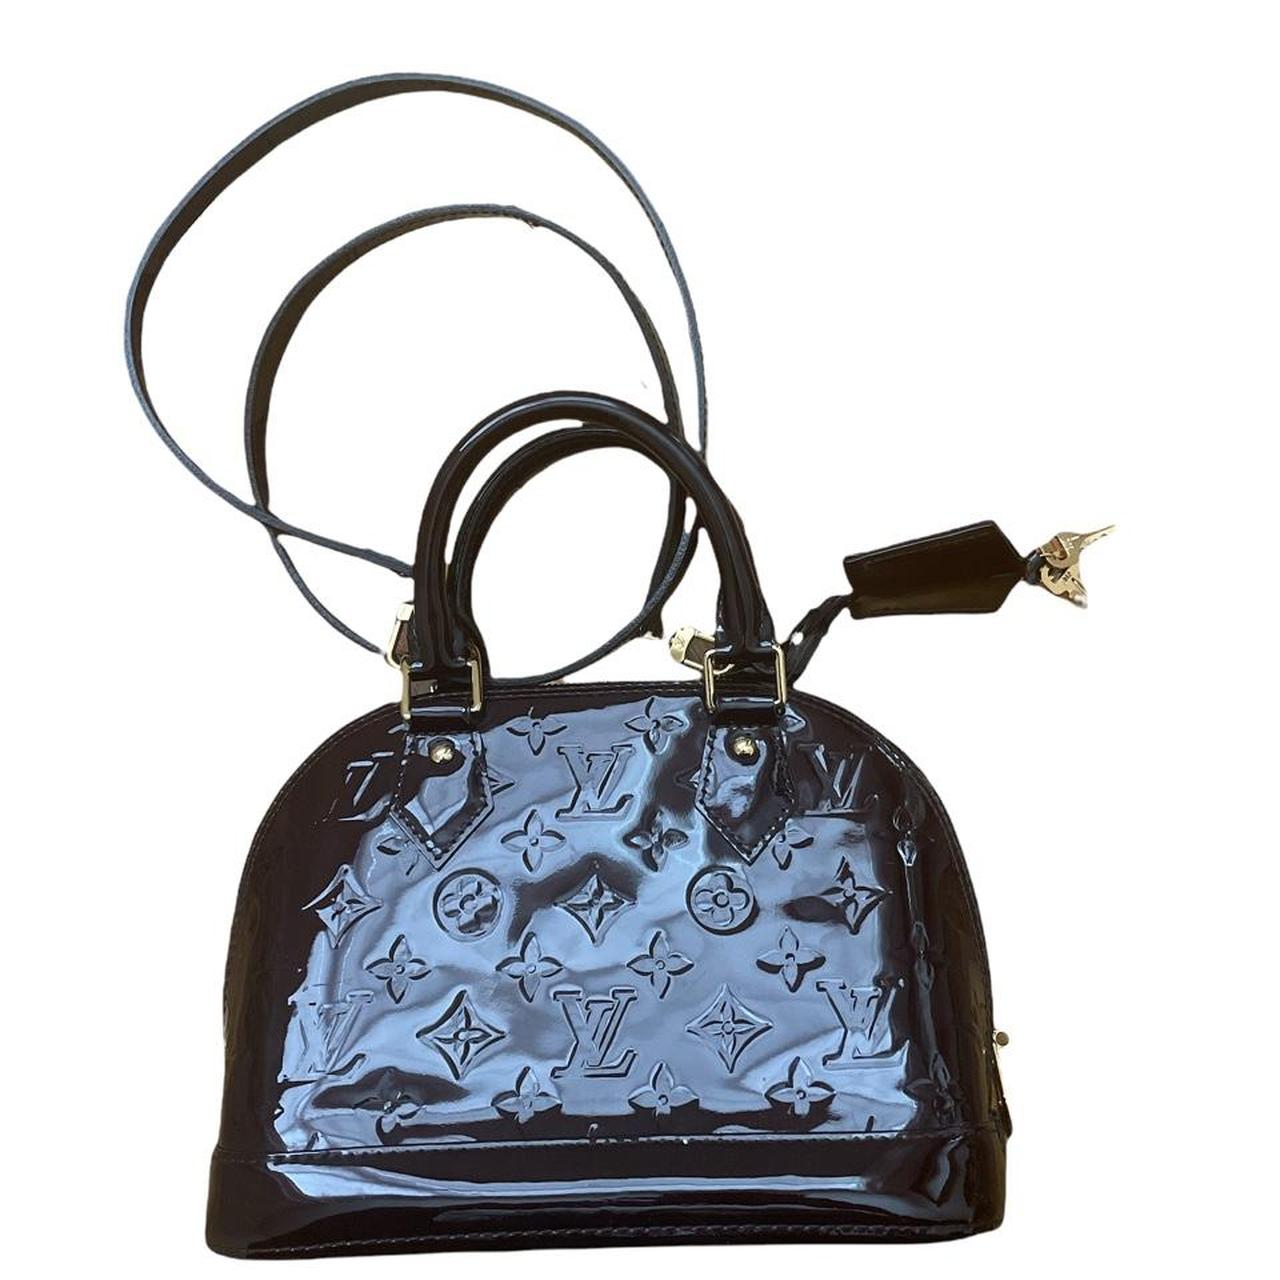 Louis Vuitton Alma BB Epi Leather (Price - Depop